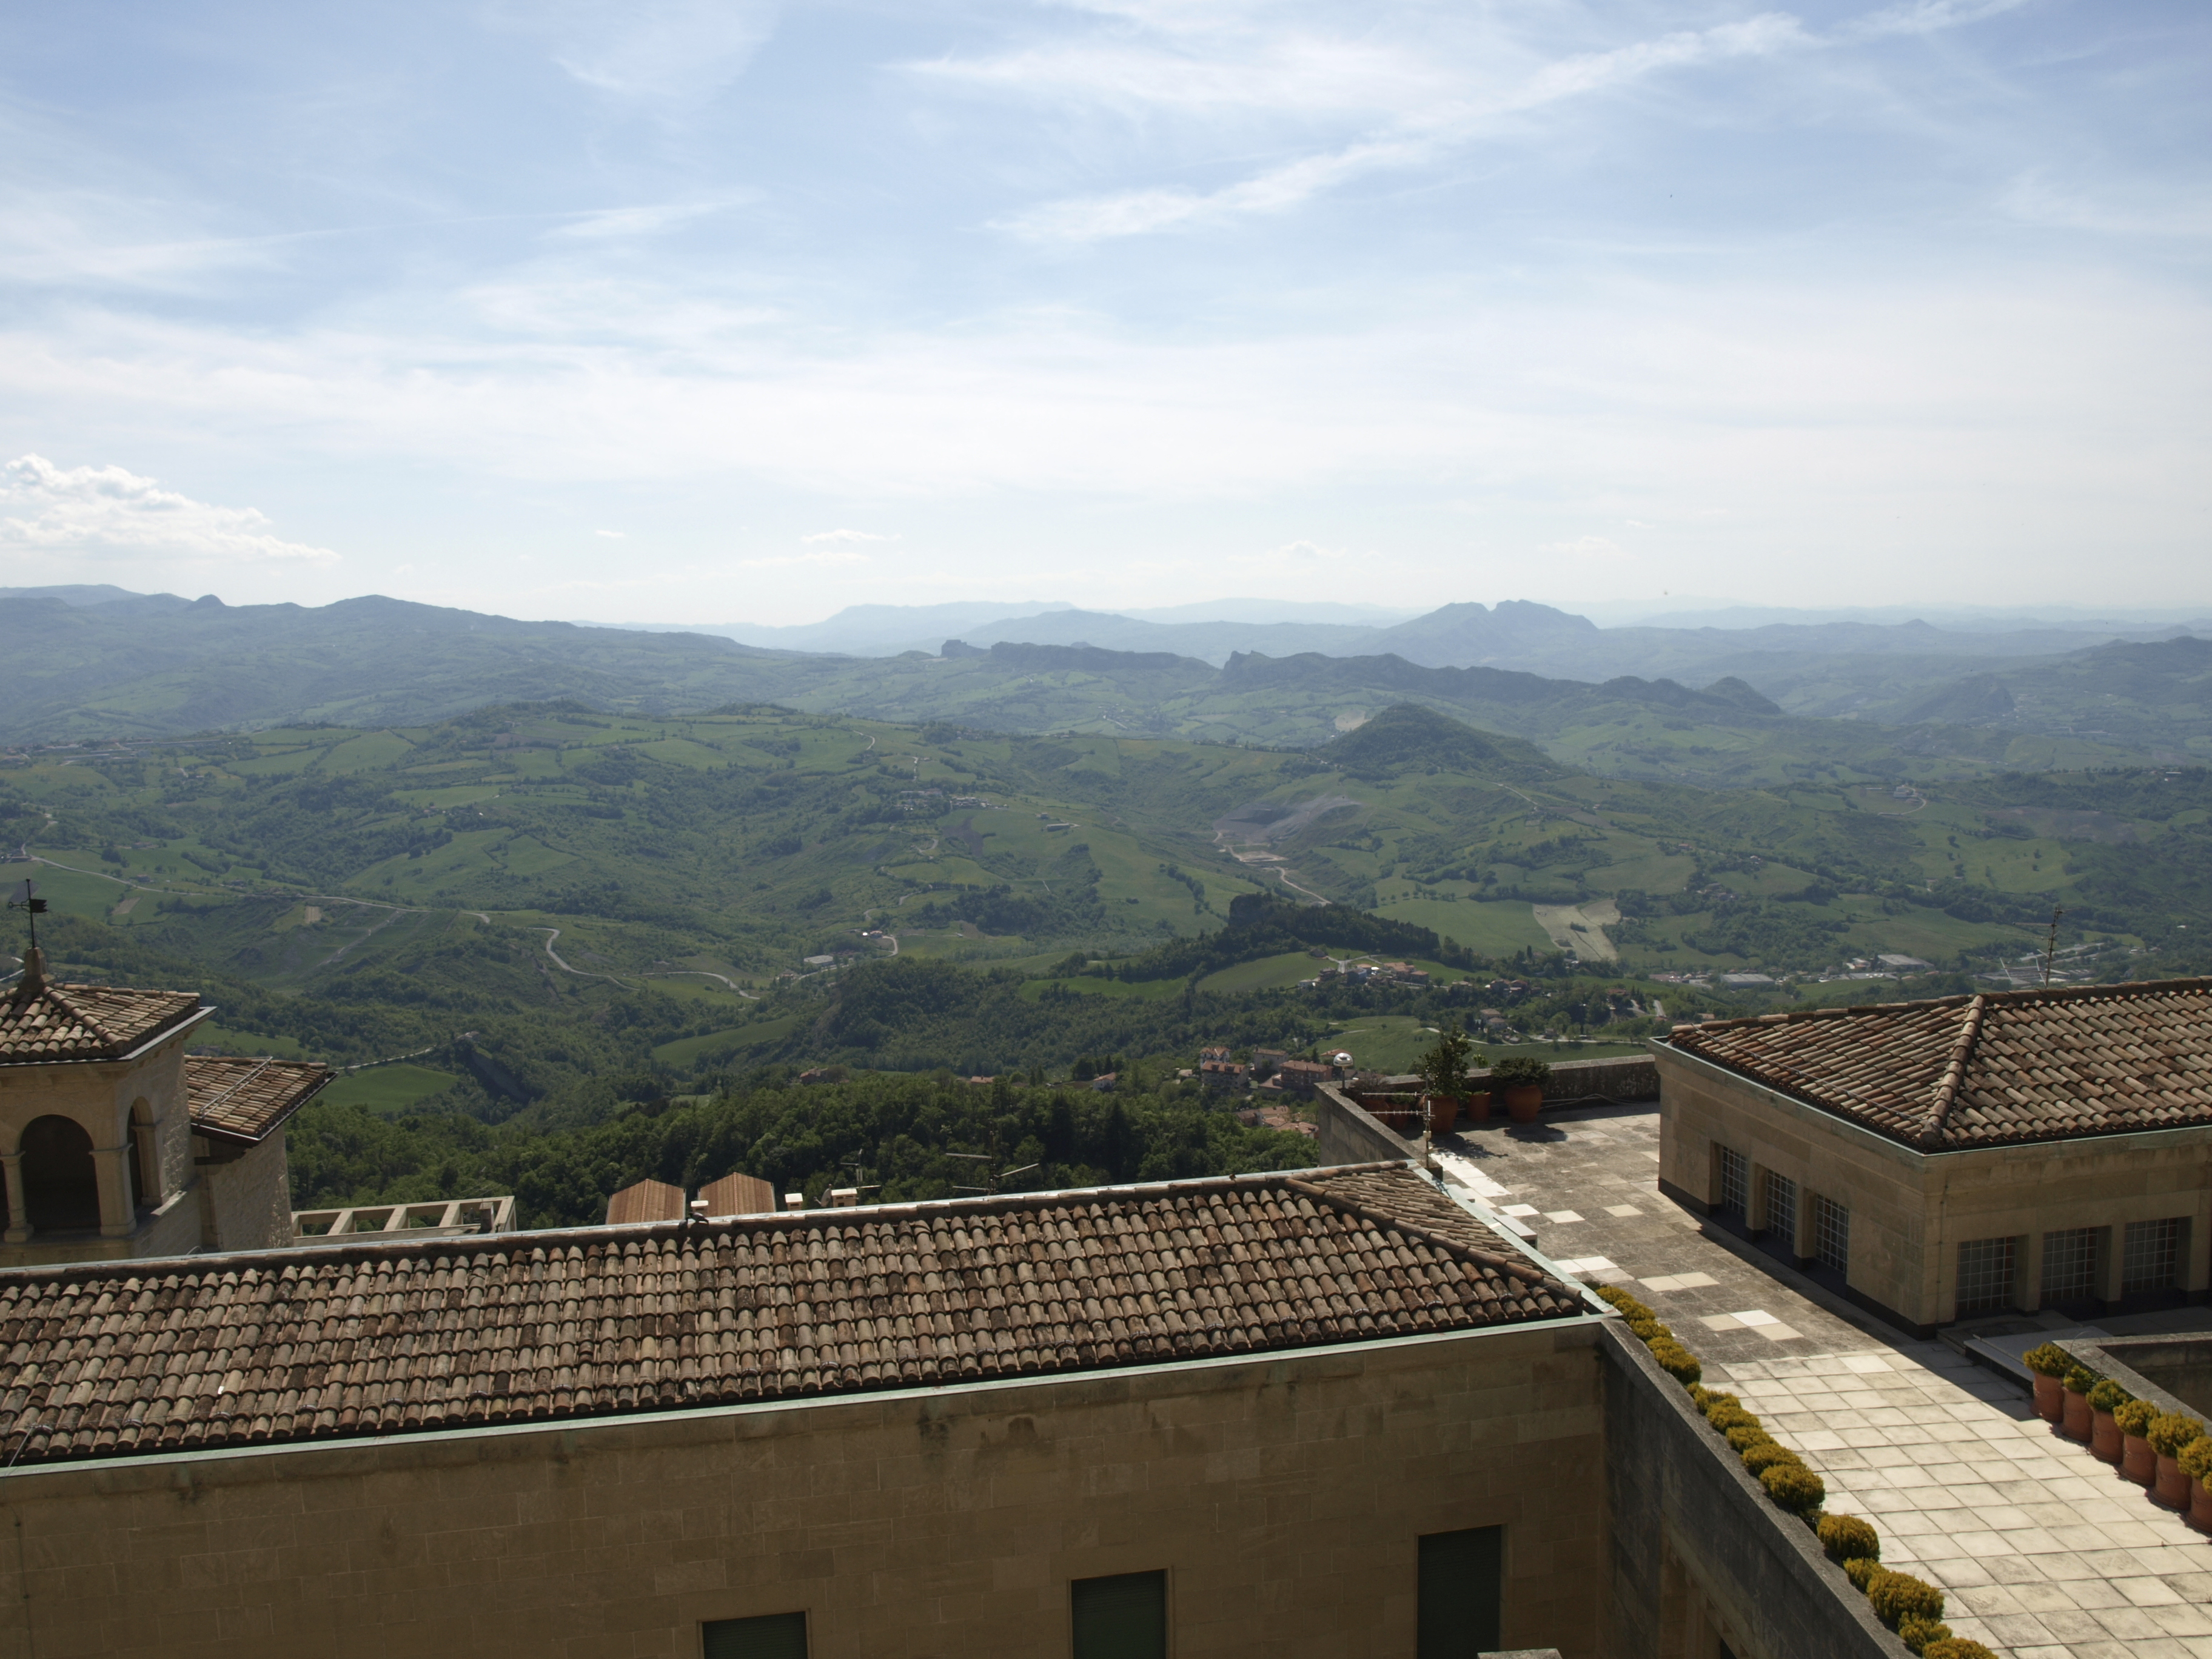 Views of Emilia Romanga from San Marino